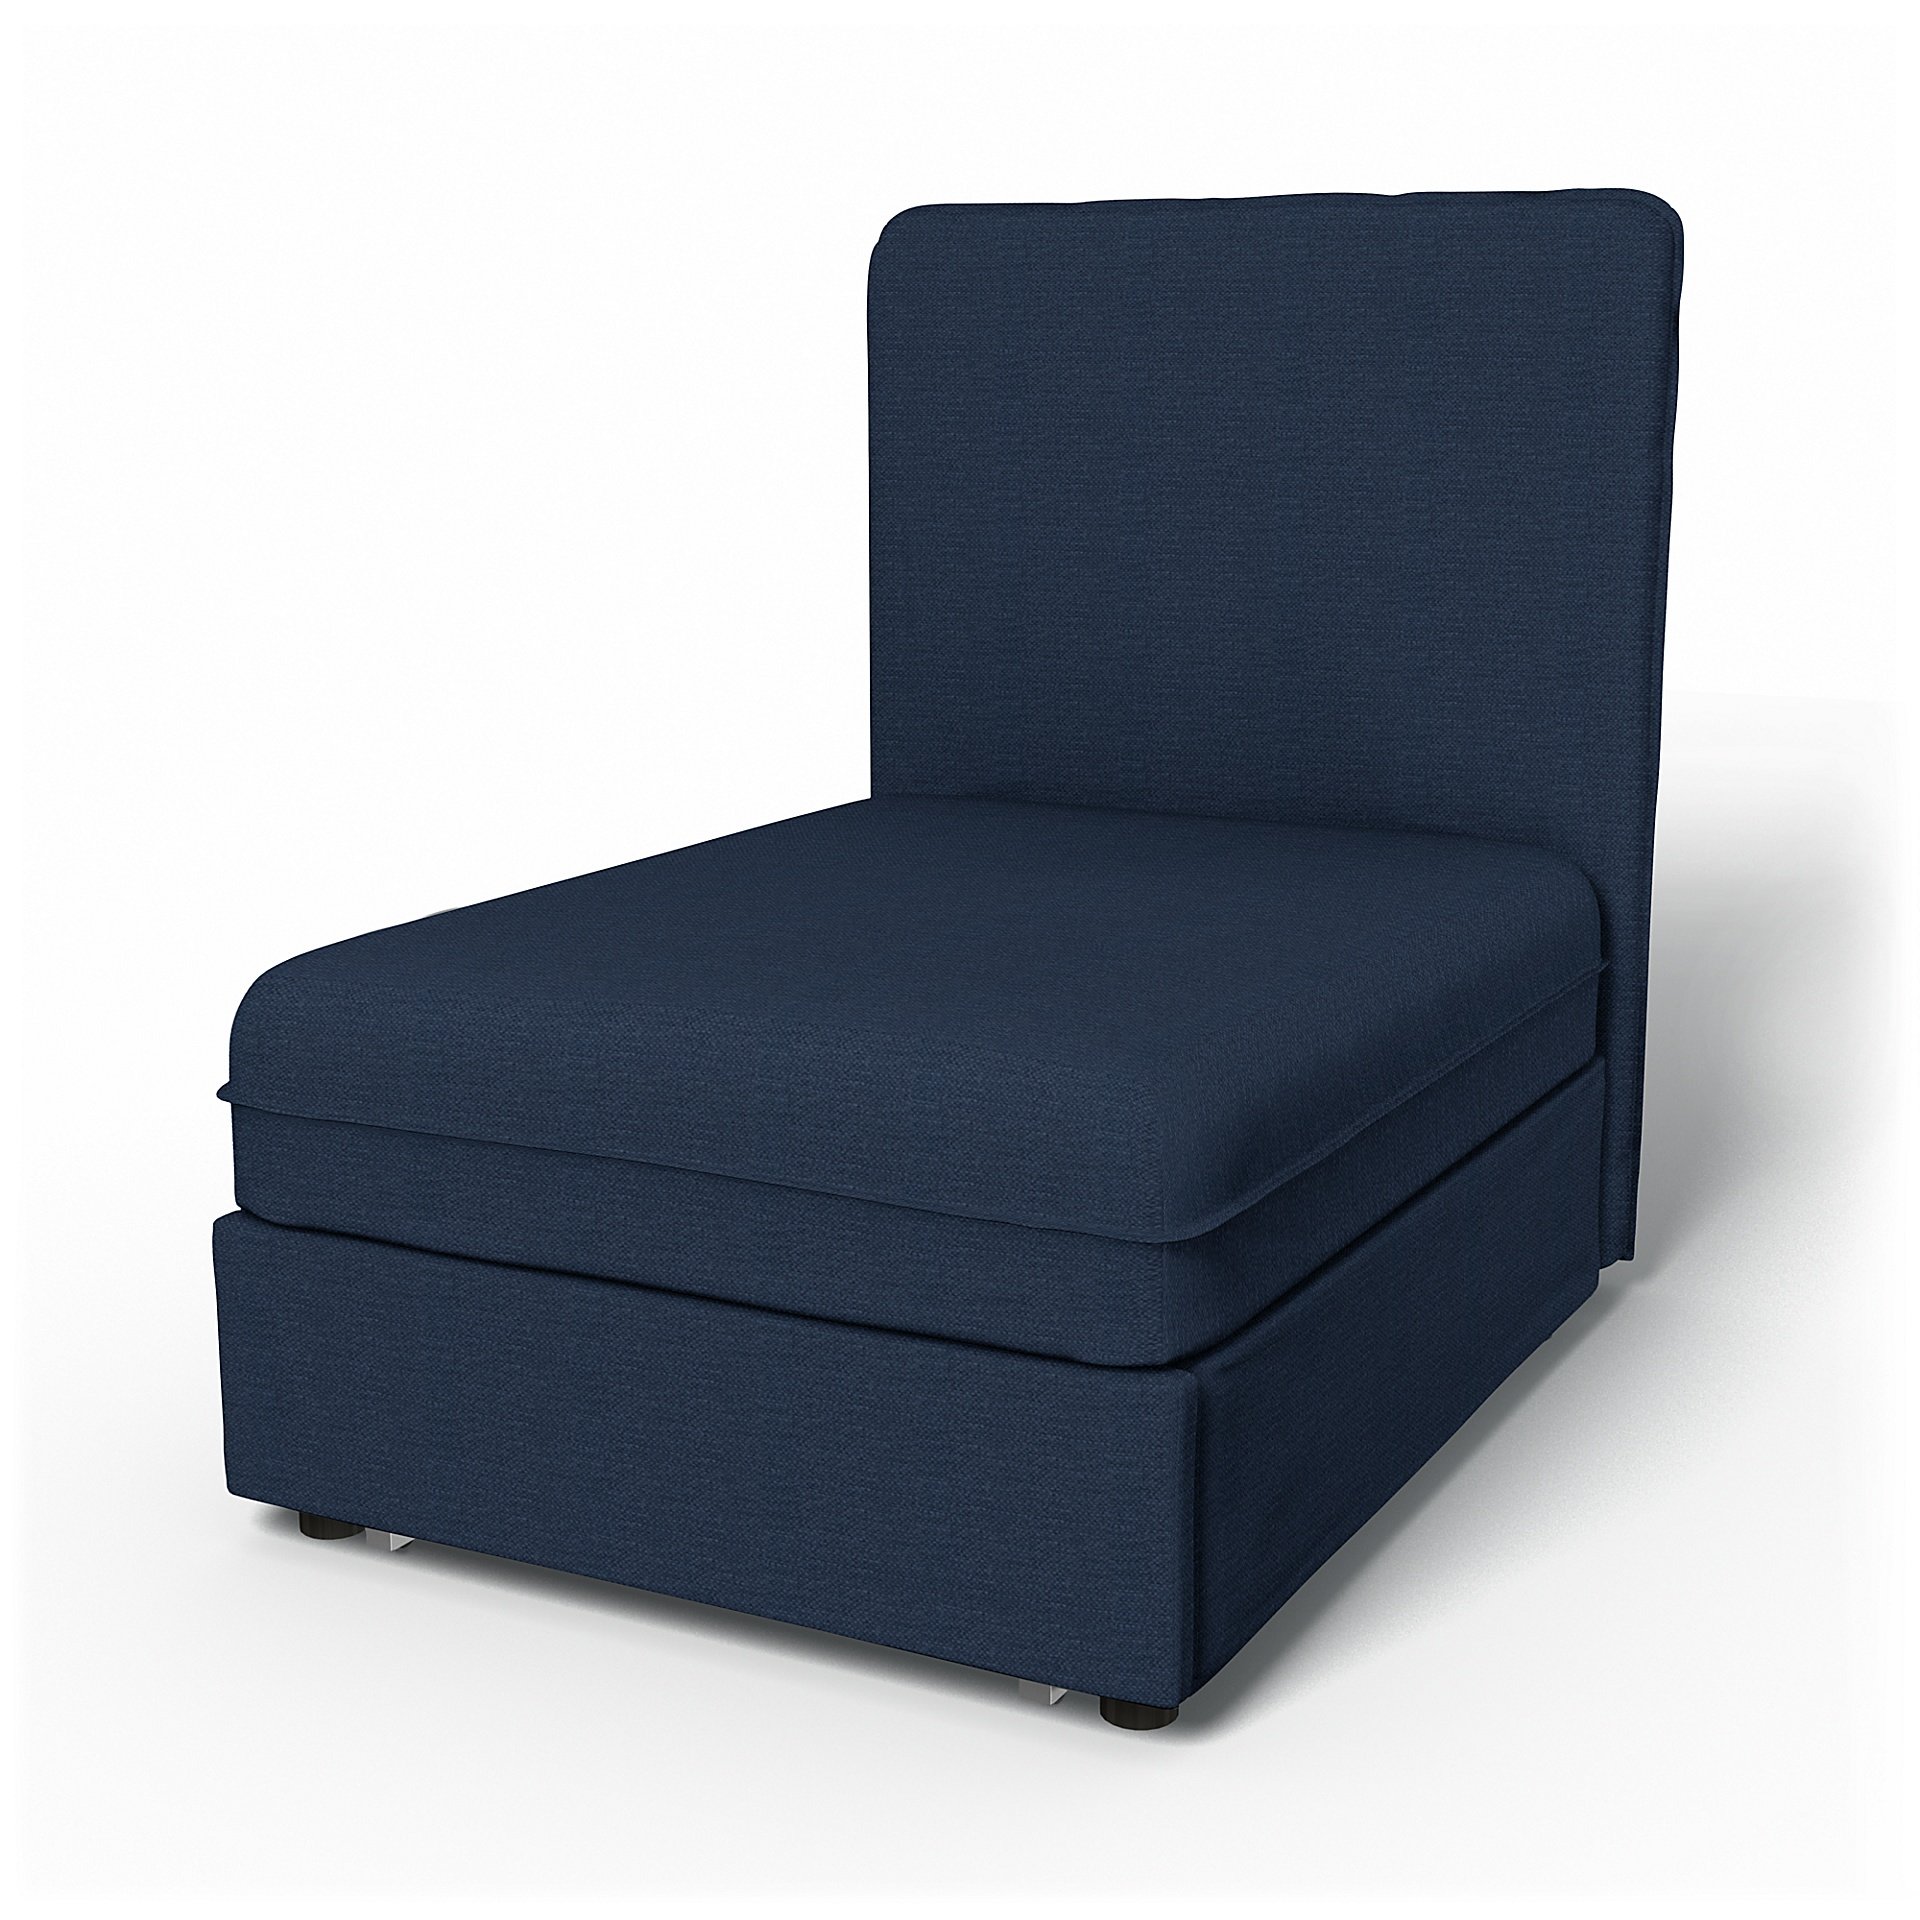 IKEA - Vallentuna Seat Module with High Back Sofa Bed Cover (80x100x46cm), Navy Blue, Linen - Bemz